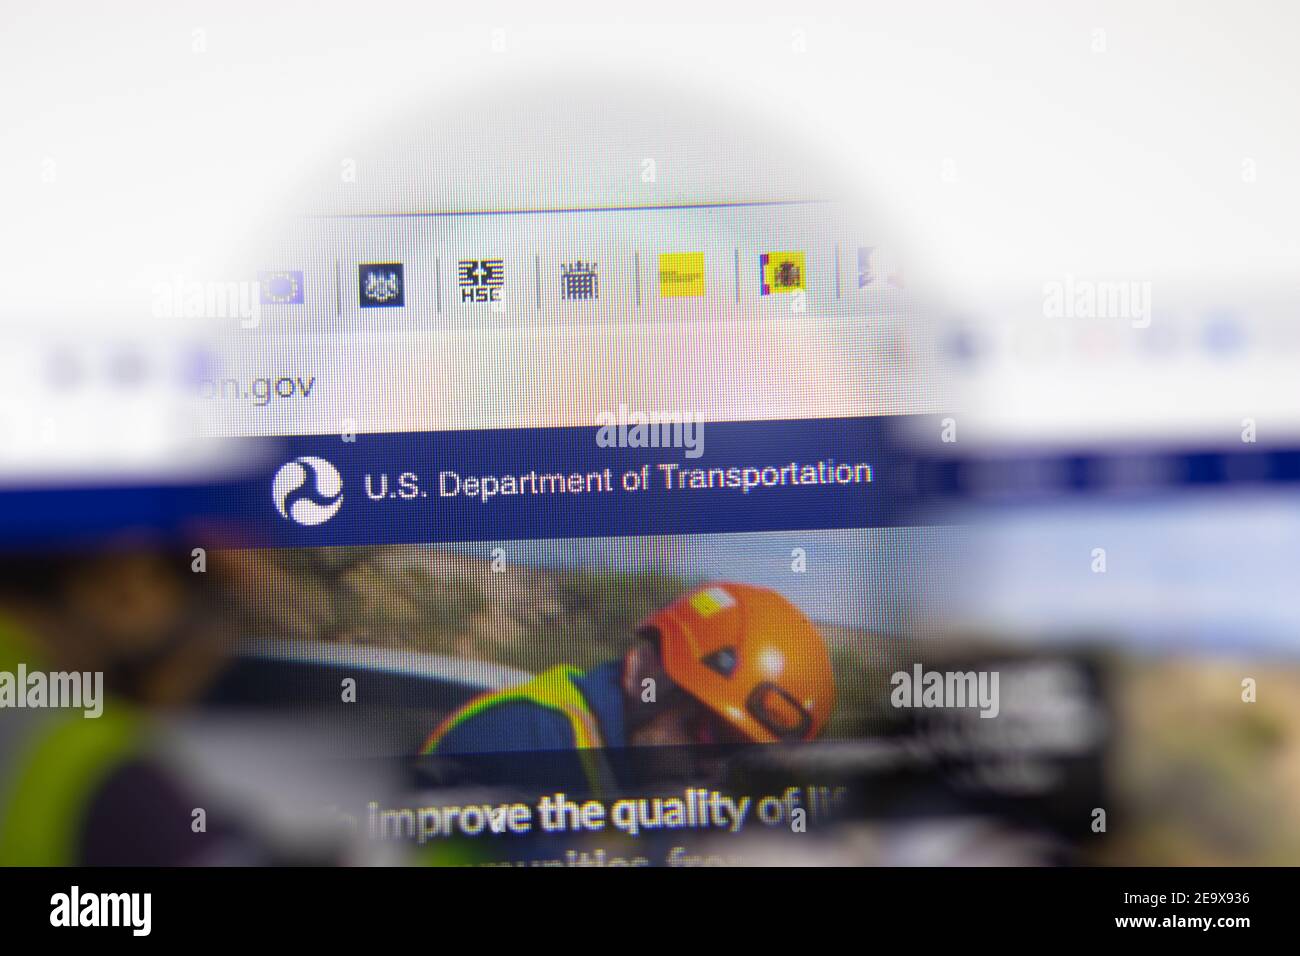 Los Angeles, USA - 1. Februar 2021: WEBSITE DES US Department of Transportation. Transportation.gov Logo auf dem Display, illustrative Editorial Stockfoto